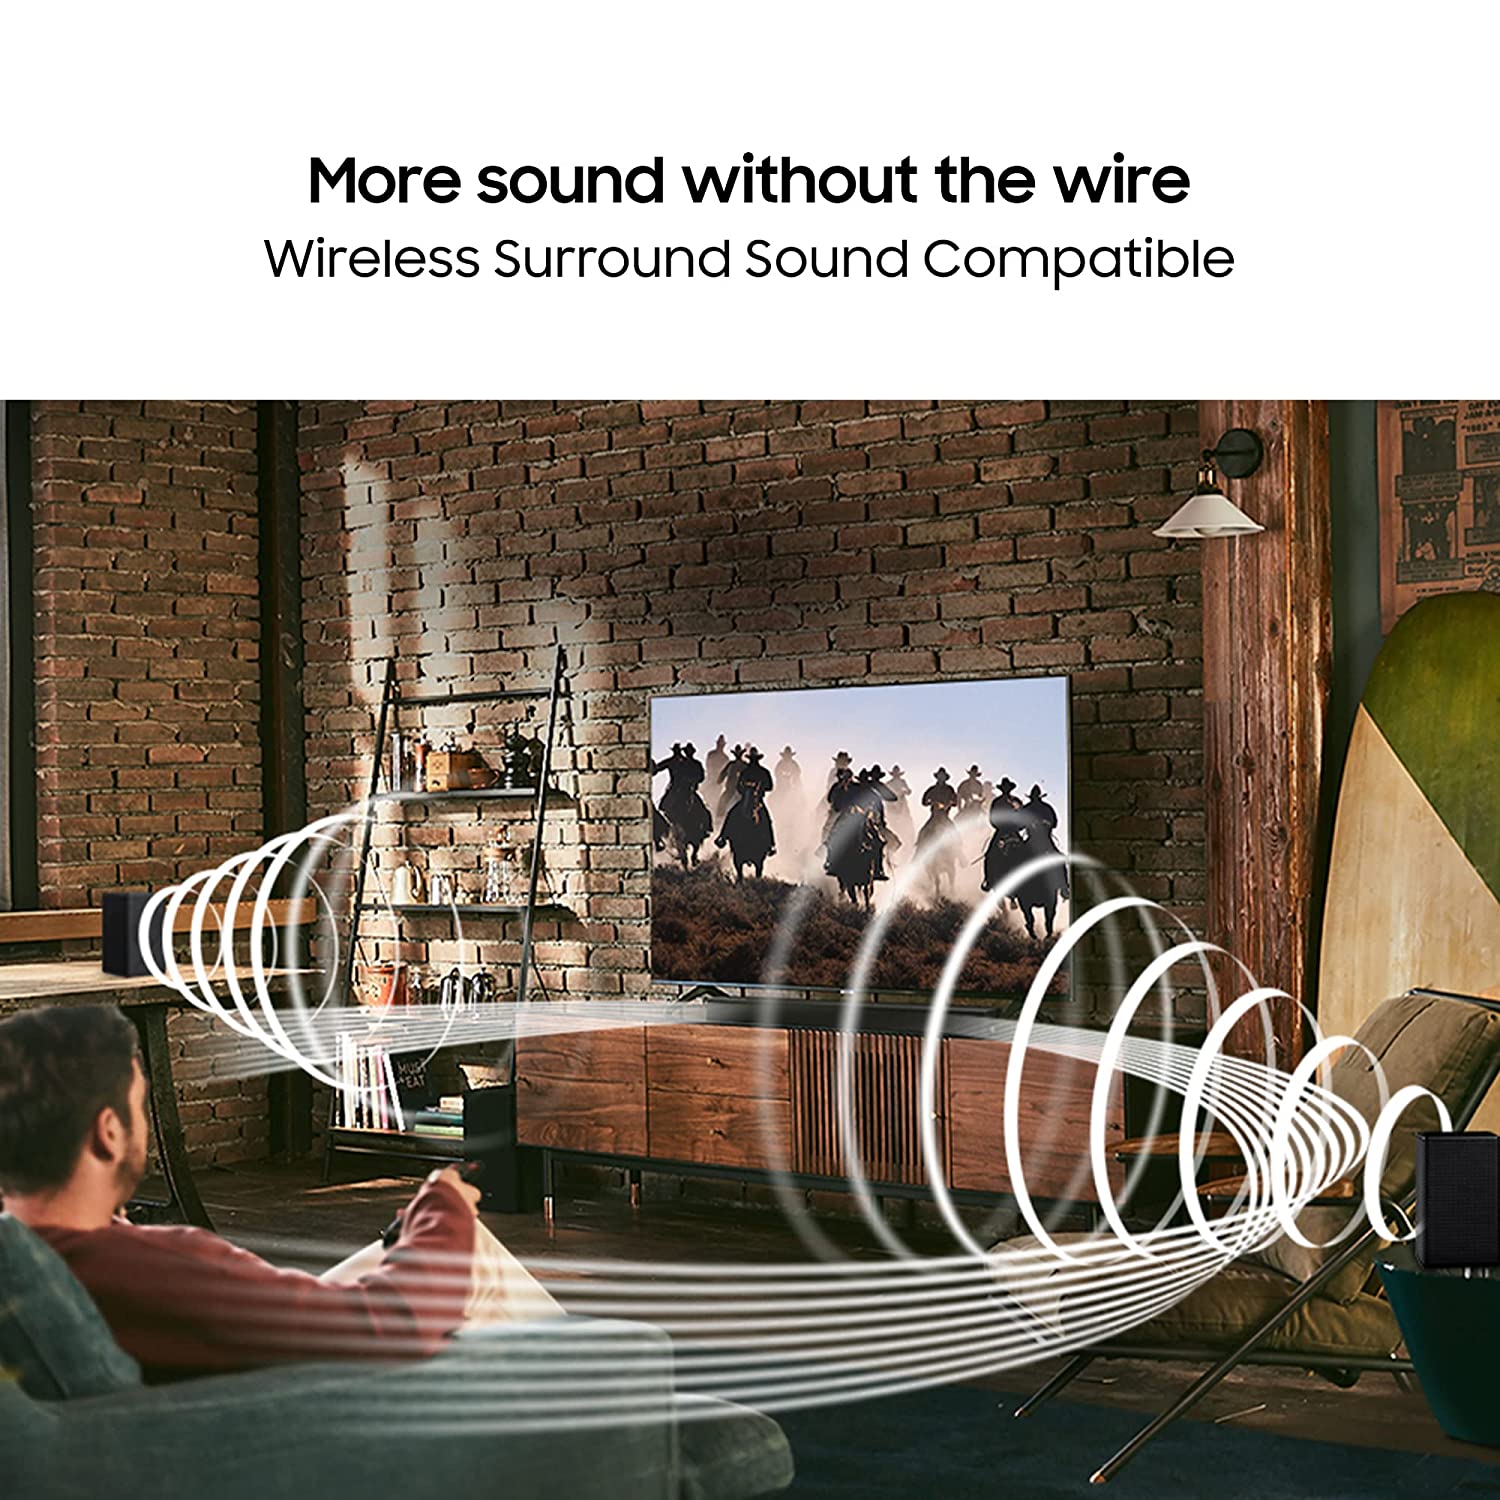 Samsung Soundbar HW-B550/XL, 2.1 Channel, Wireless Subwoofer - Mahajan Electronics Online